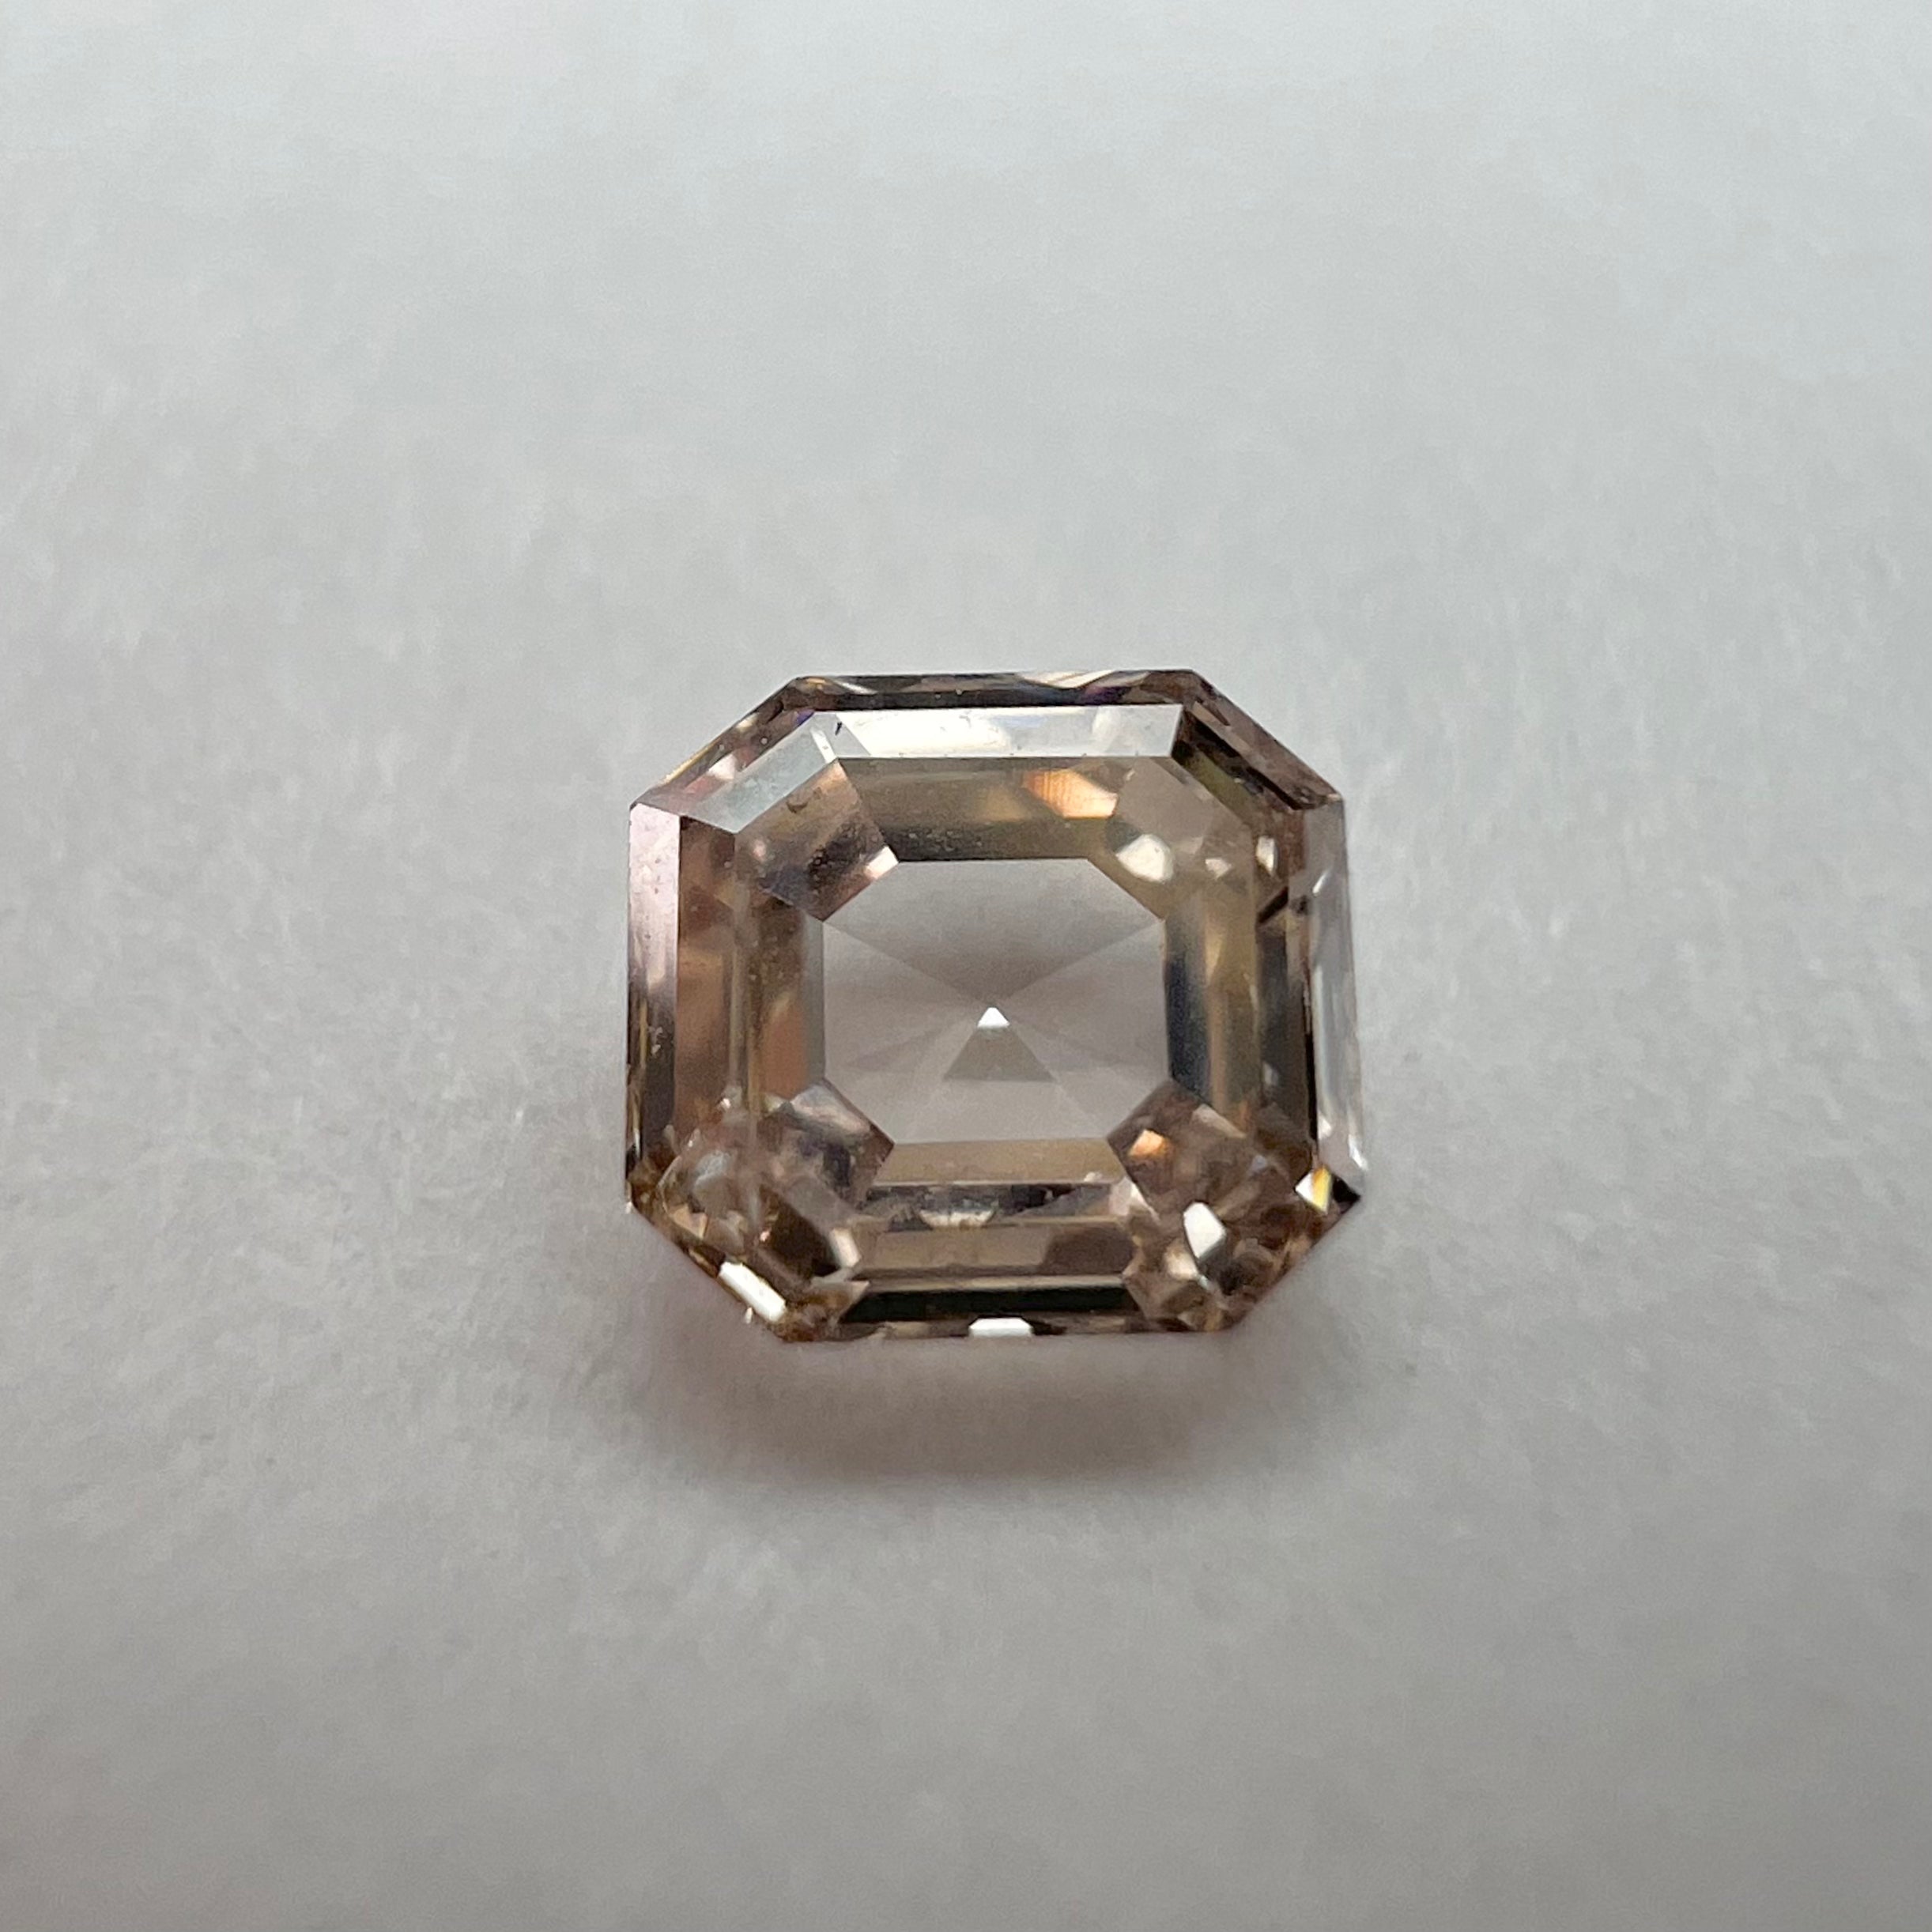 .42CT Cut Cornered Rectangular Step Cut Diamond Light Pink I1 4.62x4.22x2.17mm Natural Earth mined